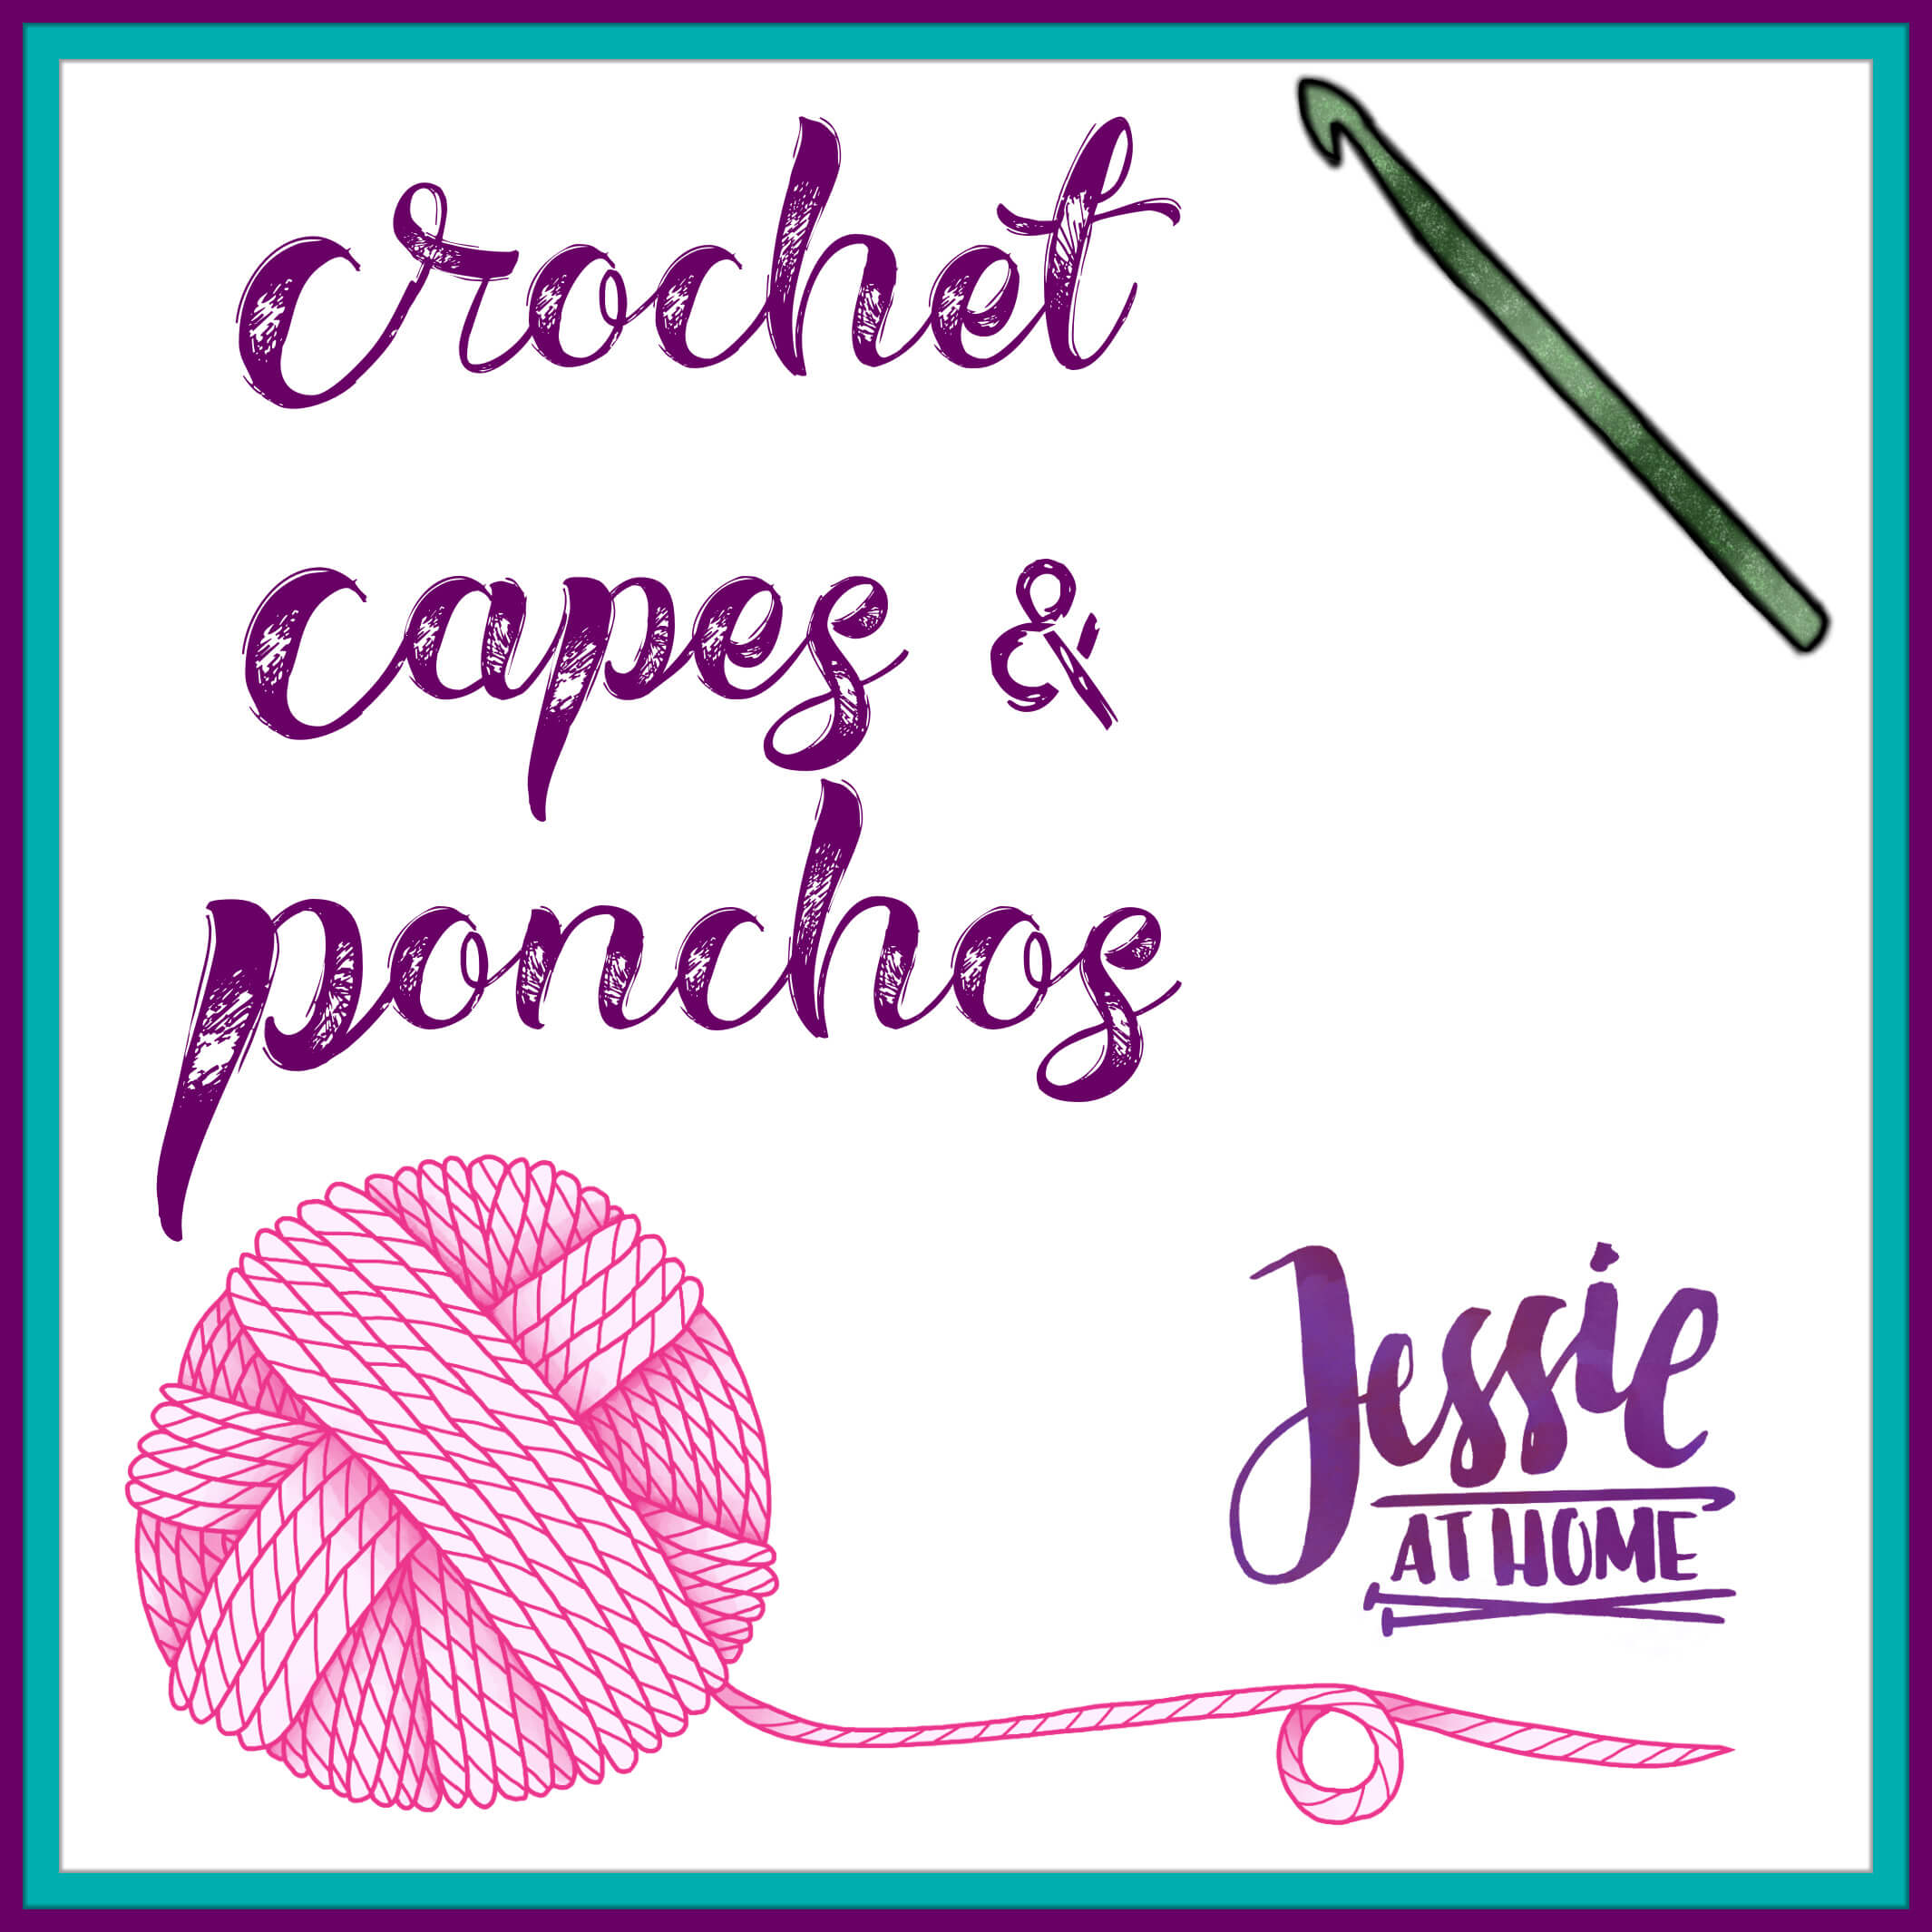 Crochet Capes & Ponchos Menu on Jessie At Home